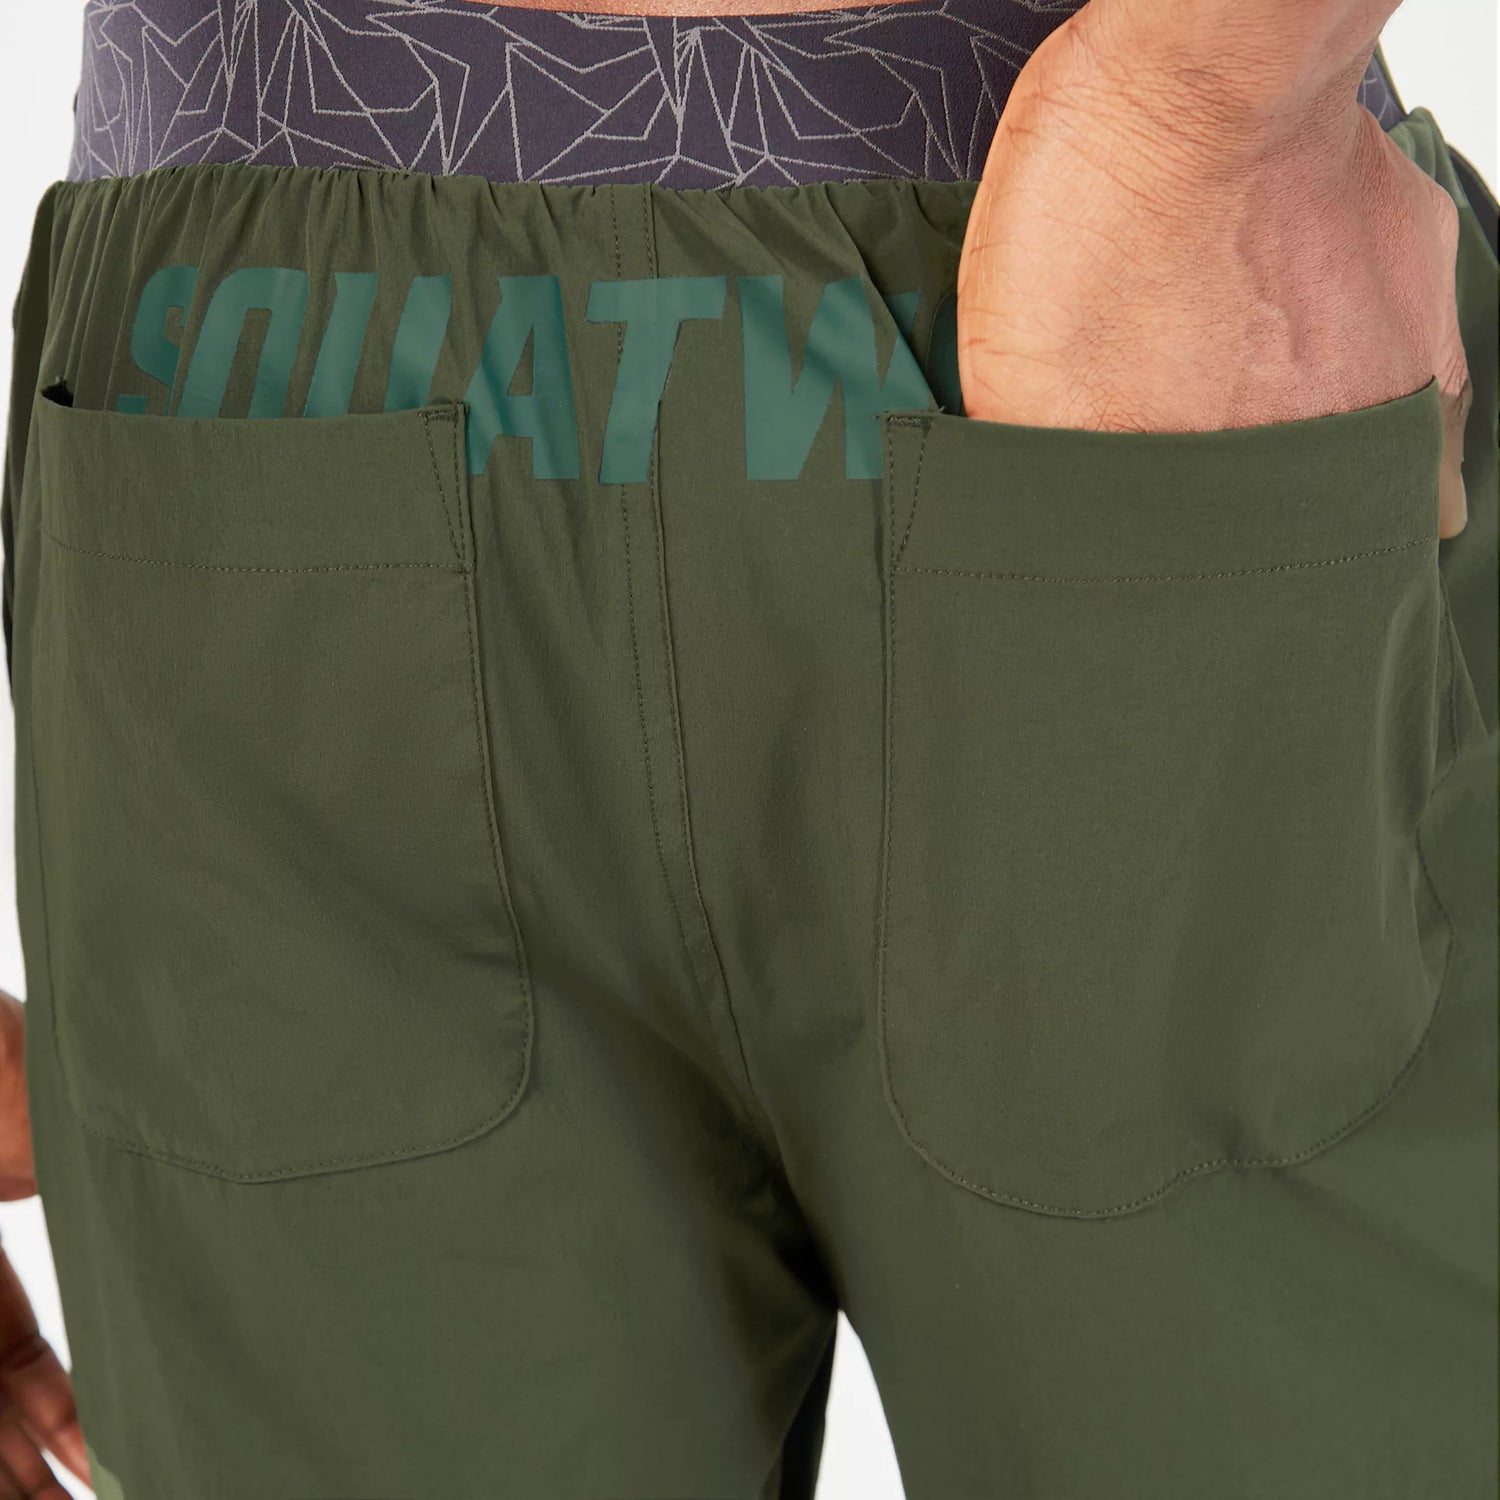 AE | Core 7 inch 2-in-1 Wordmark Shorts - Kombu green | Gym Shorts ...